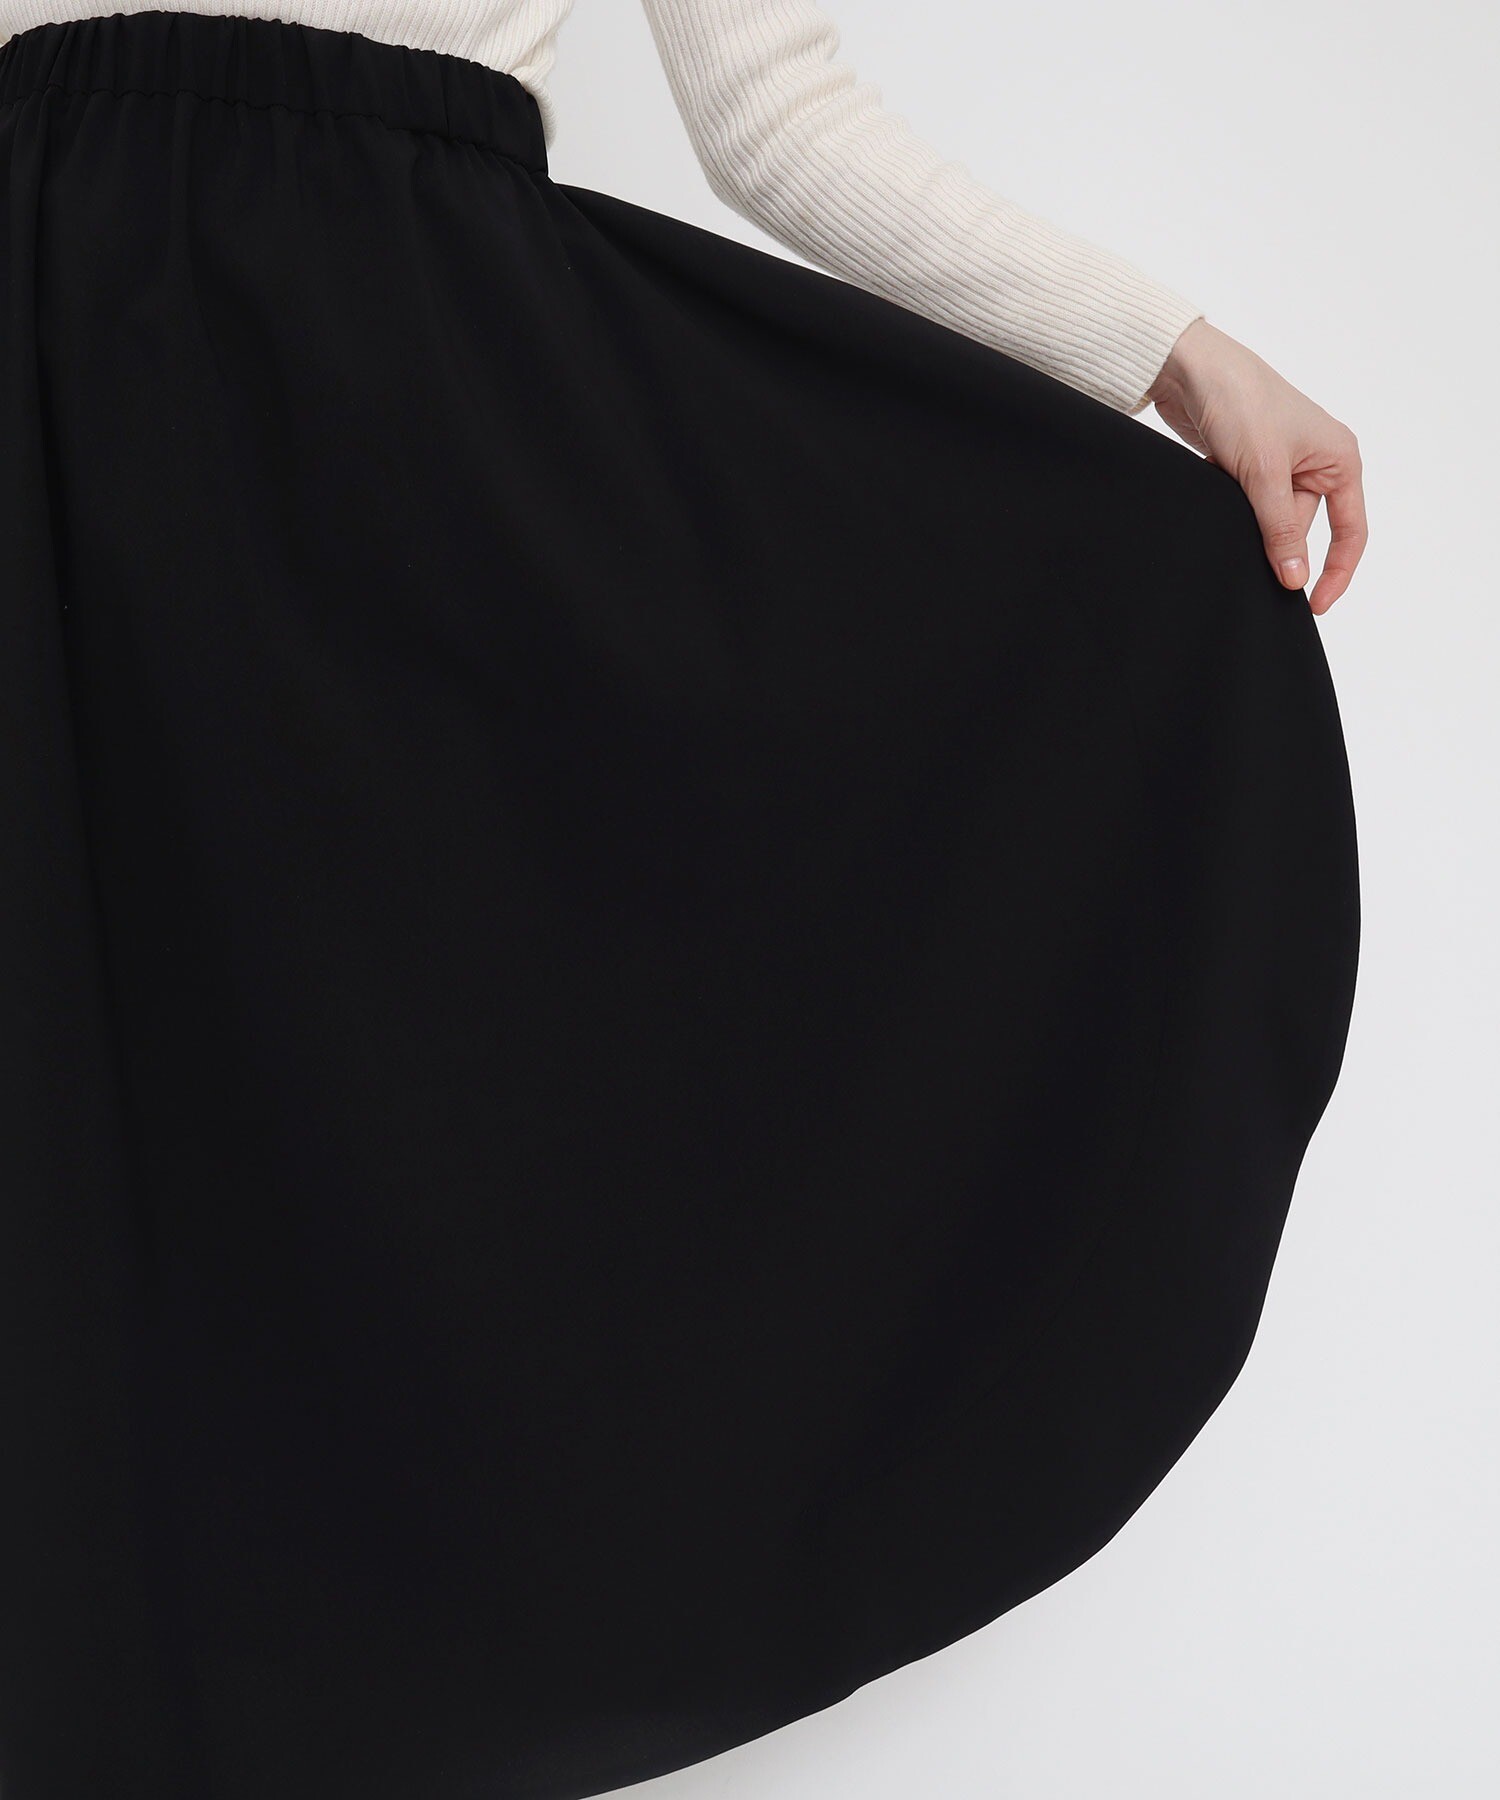 AMBIDEX Store 【予約販売】○△BLACK full moon skirt(F クロ): l ...